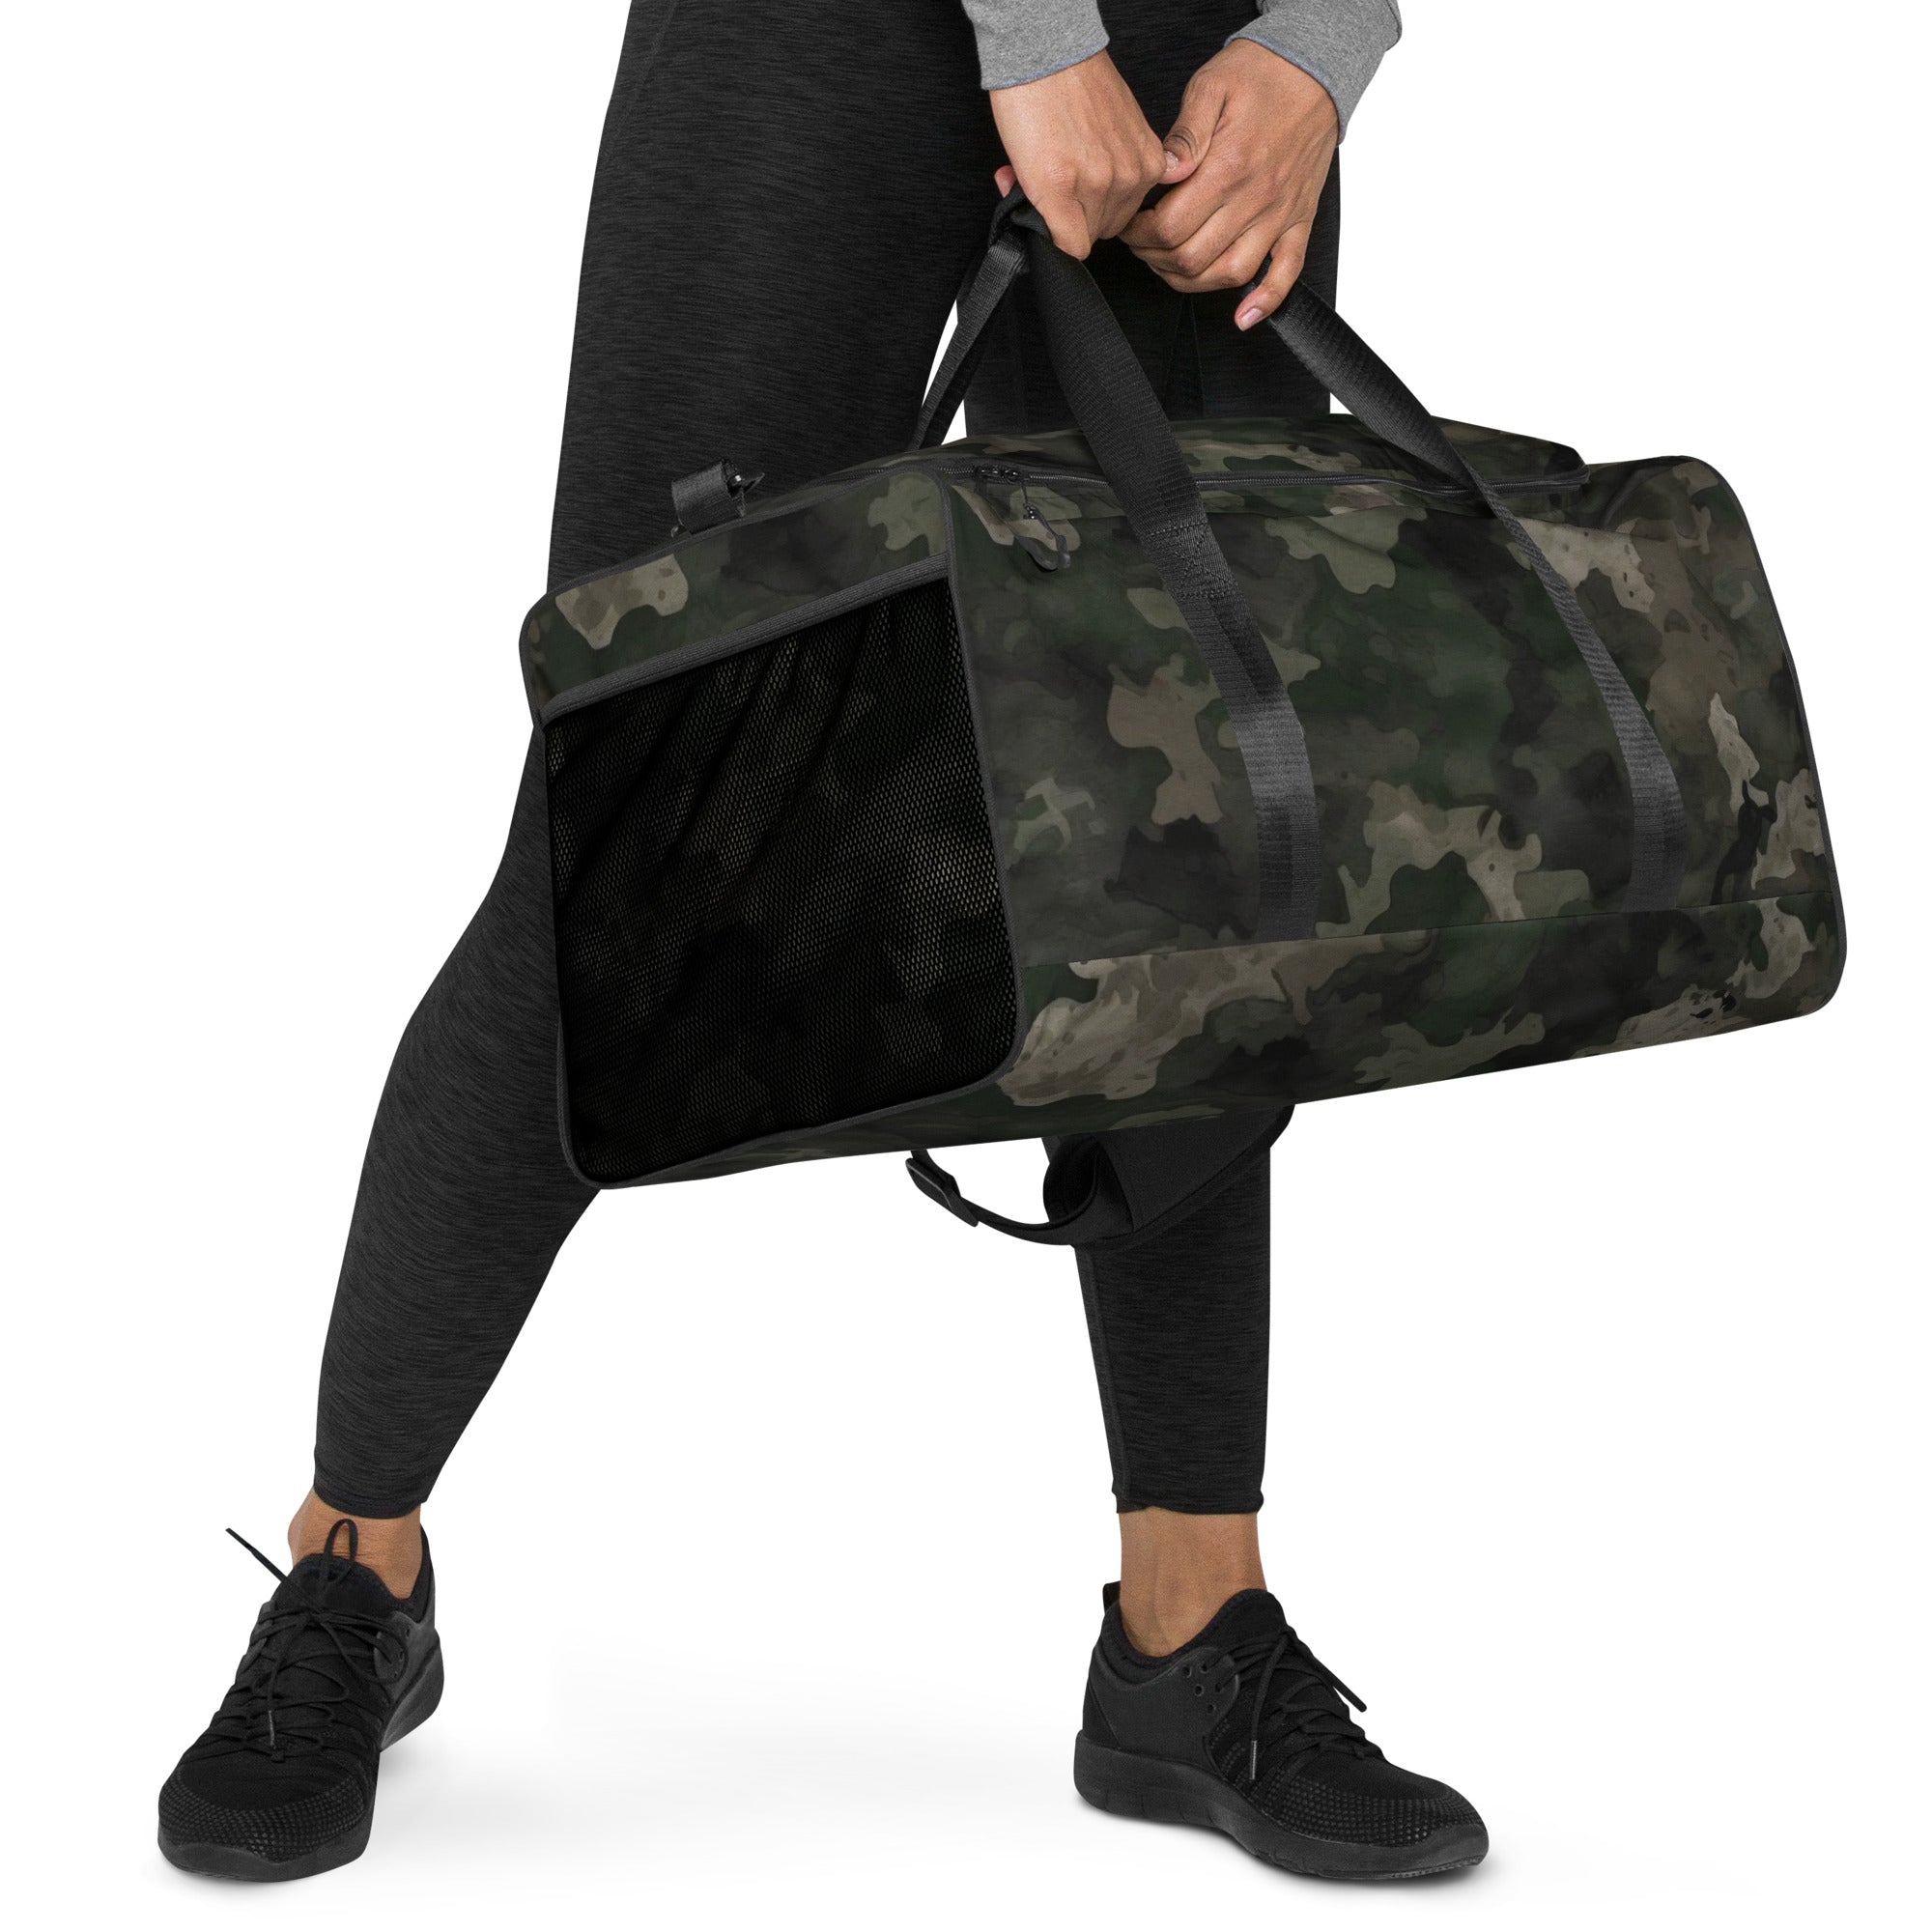 Aloha Dynasty Camouflage Duffle Bag - large (The New Neutral)